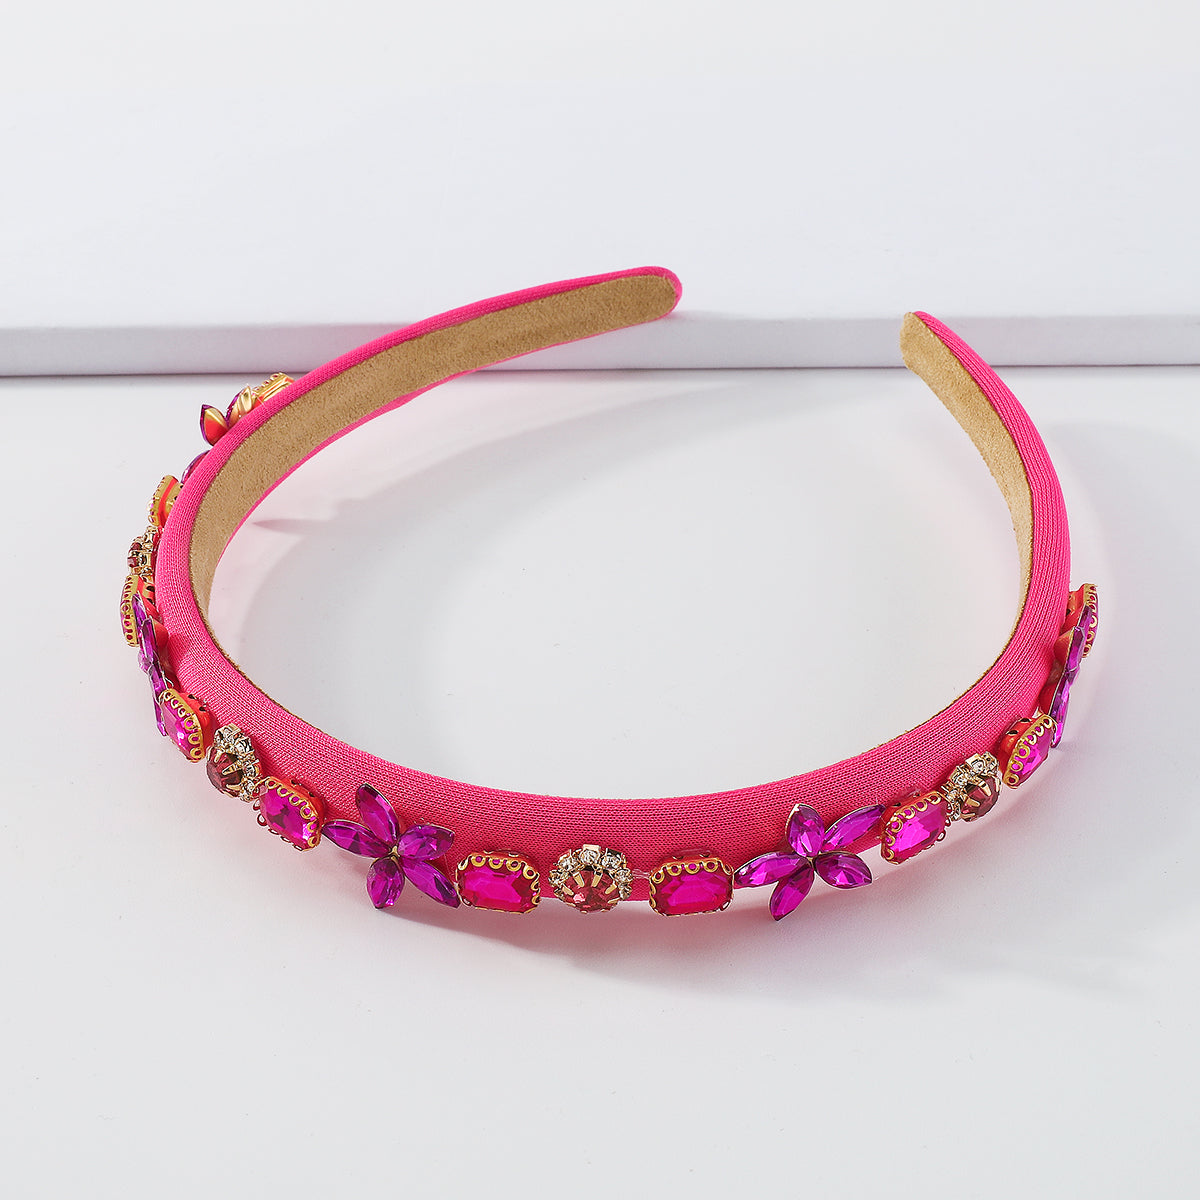 Shiny Handmade Crystal Flower Colorful Headband medyjewelry